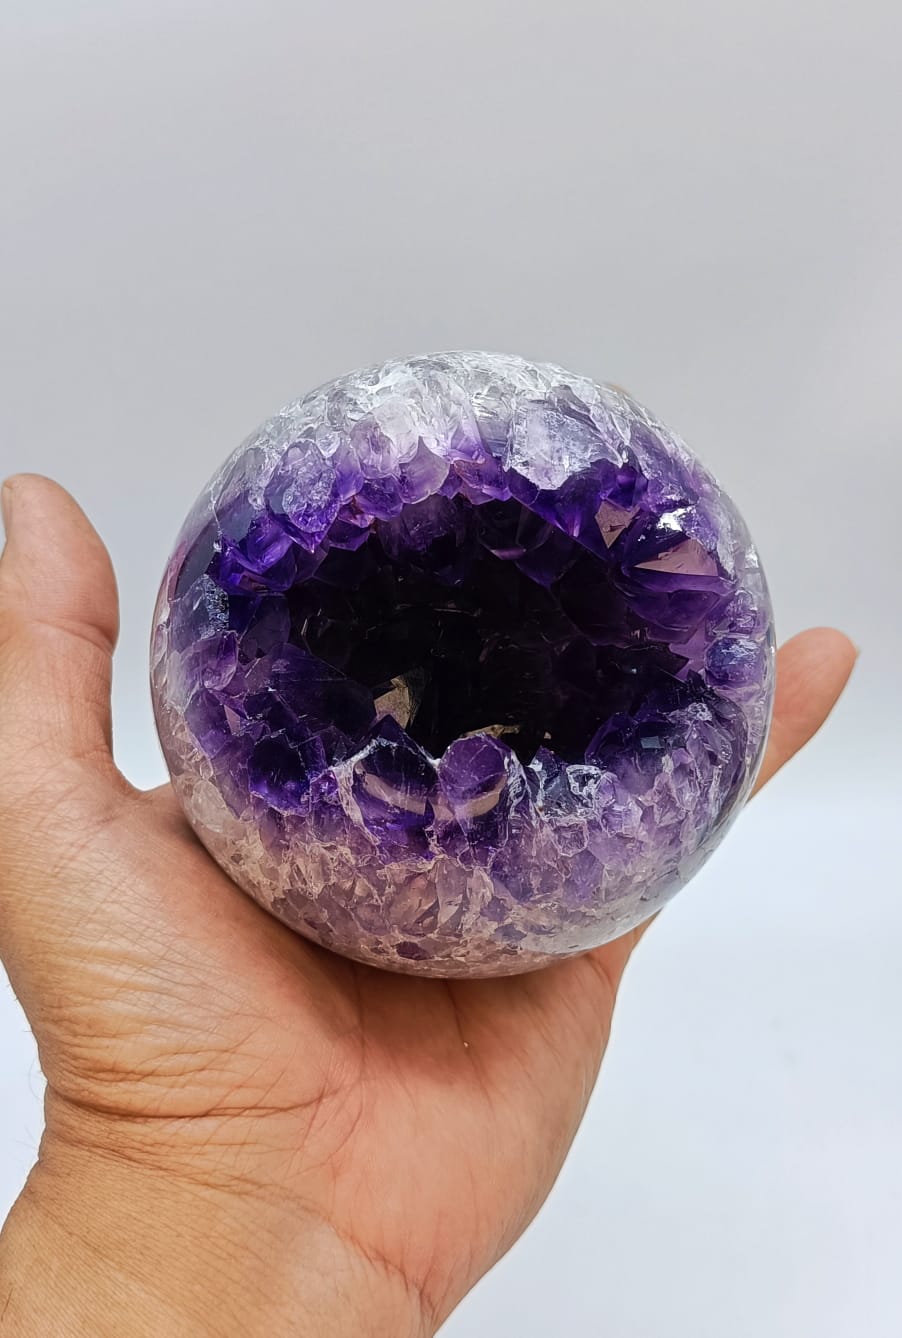 Amethyst Sphere High Grade Best Quality 1113g Crystal Wellness